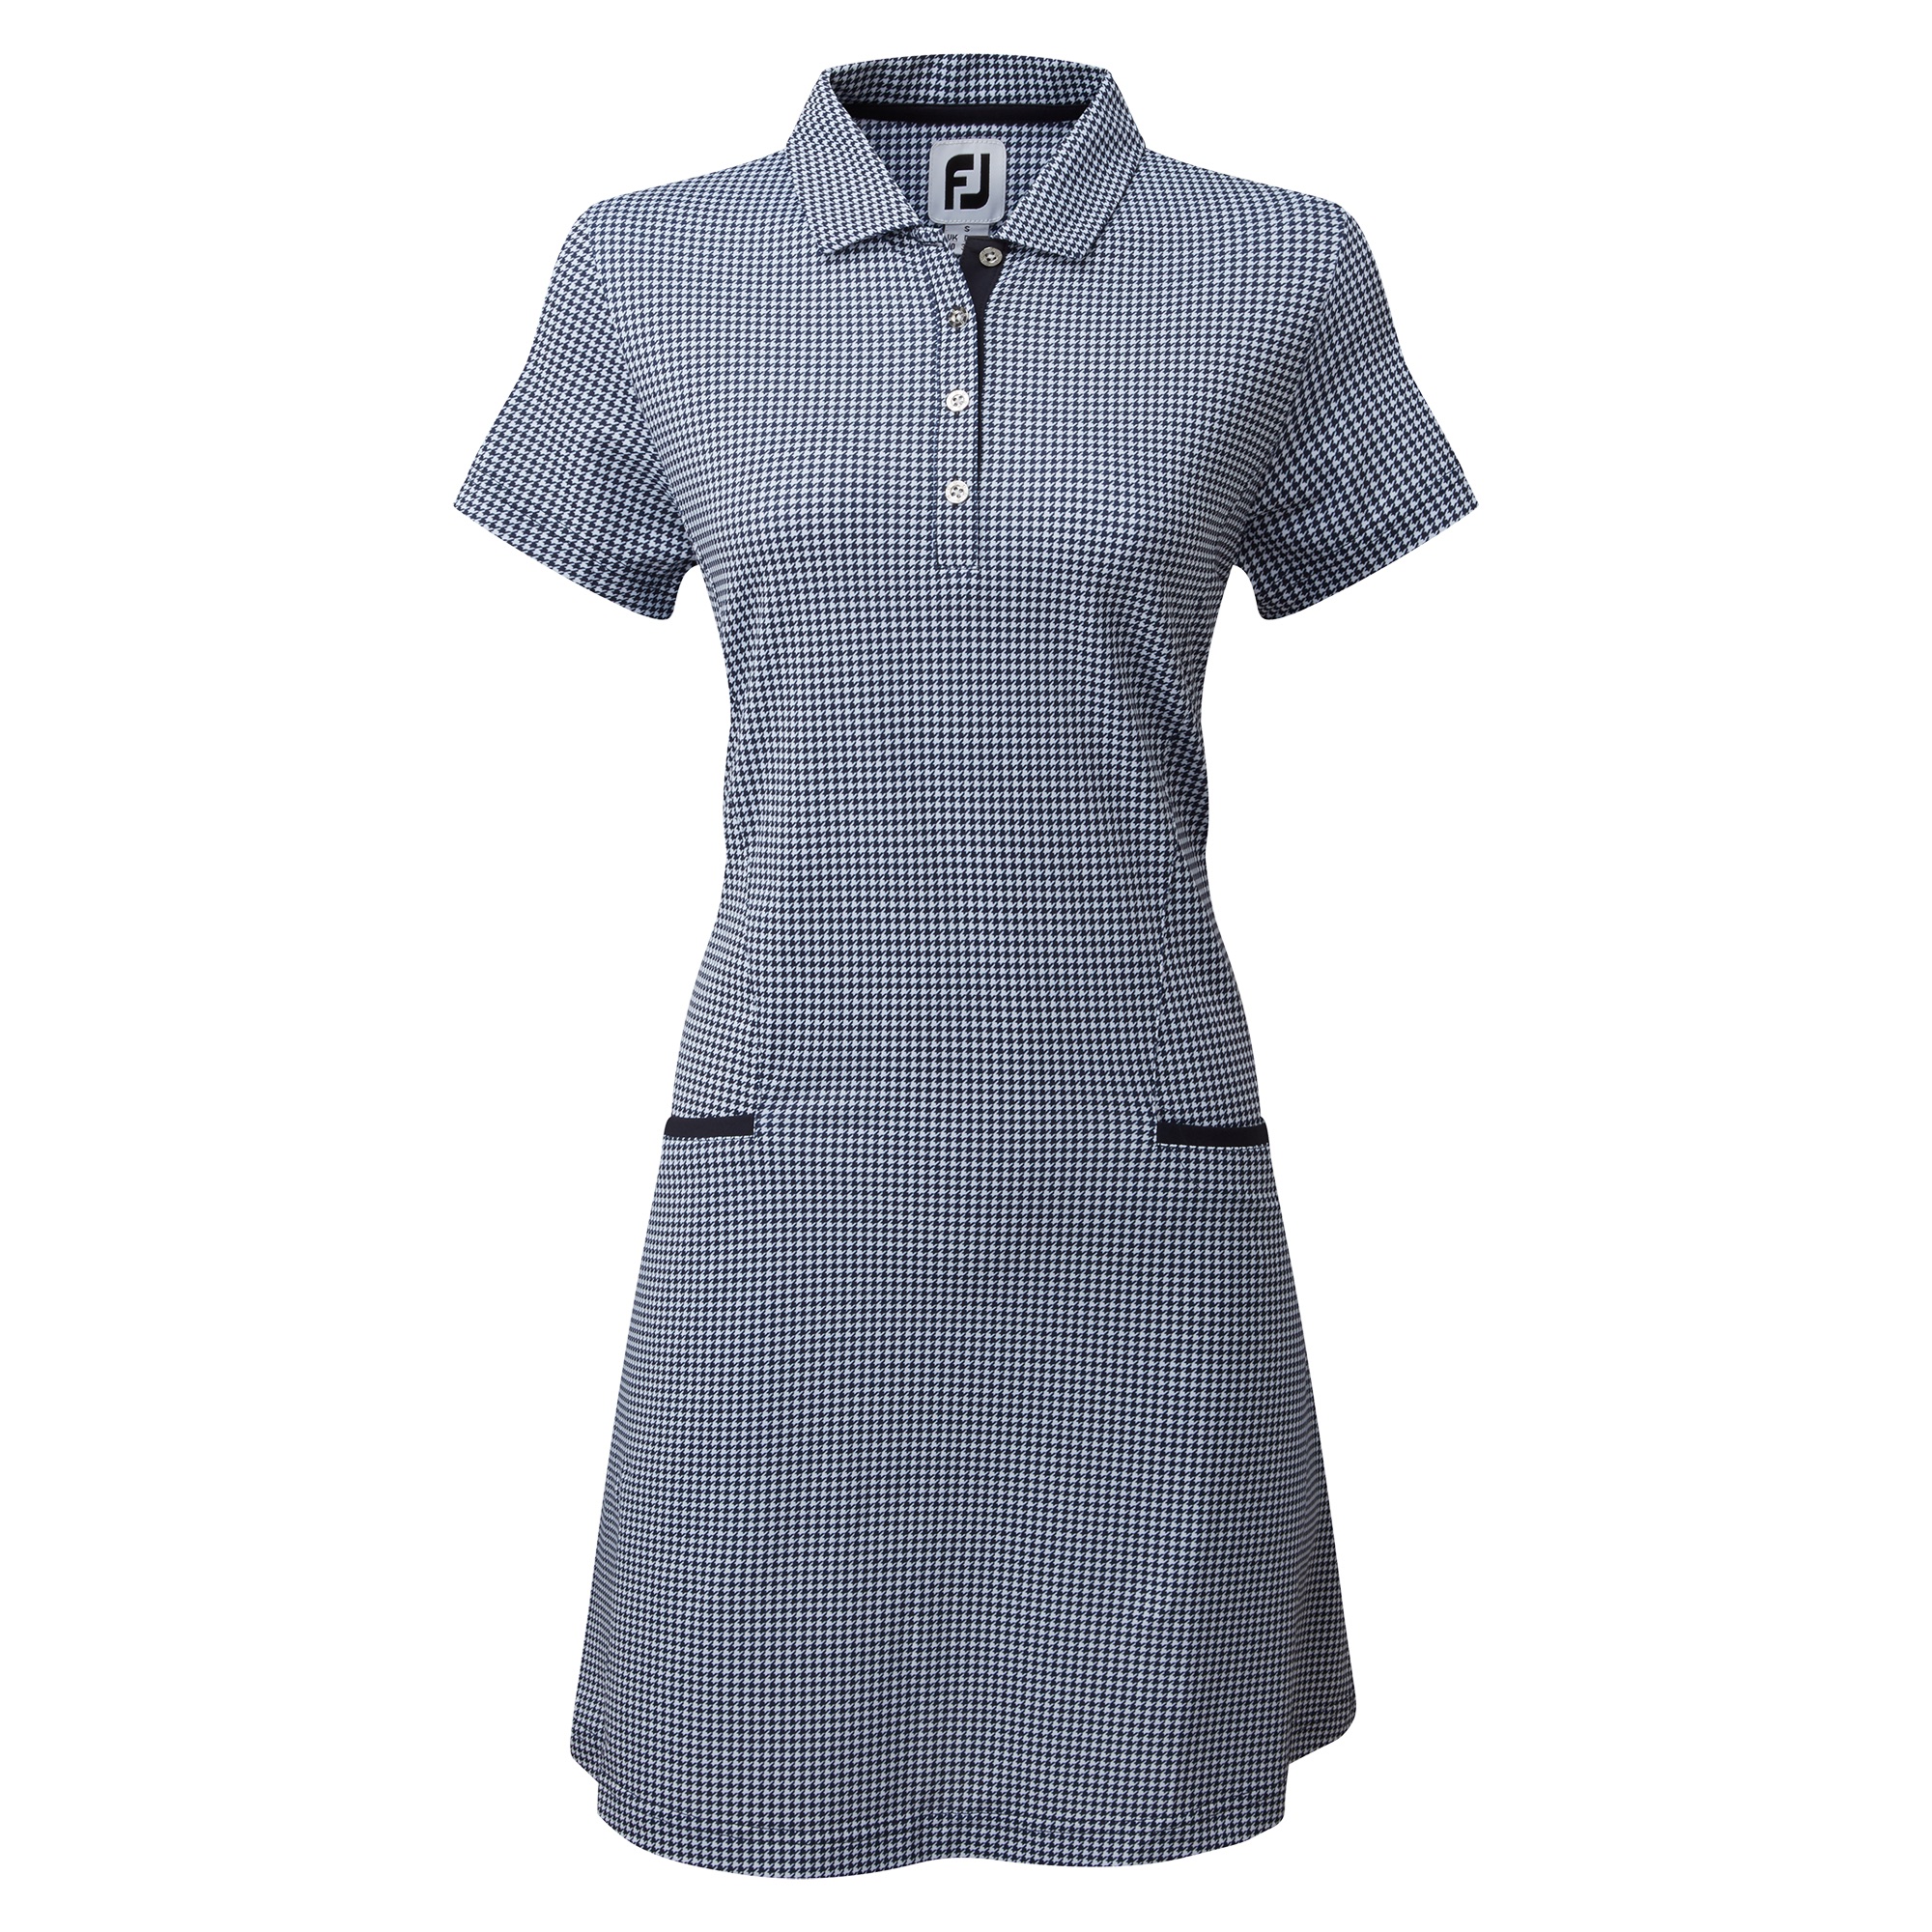 Footjoy Golf Kleid Damen | Skirts/Dresses | Women | Golf clothing ...